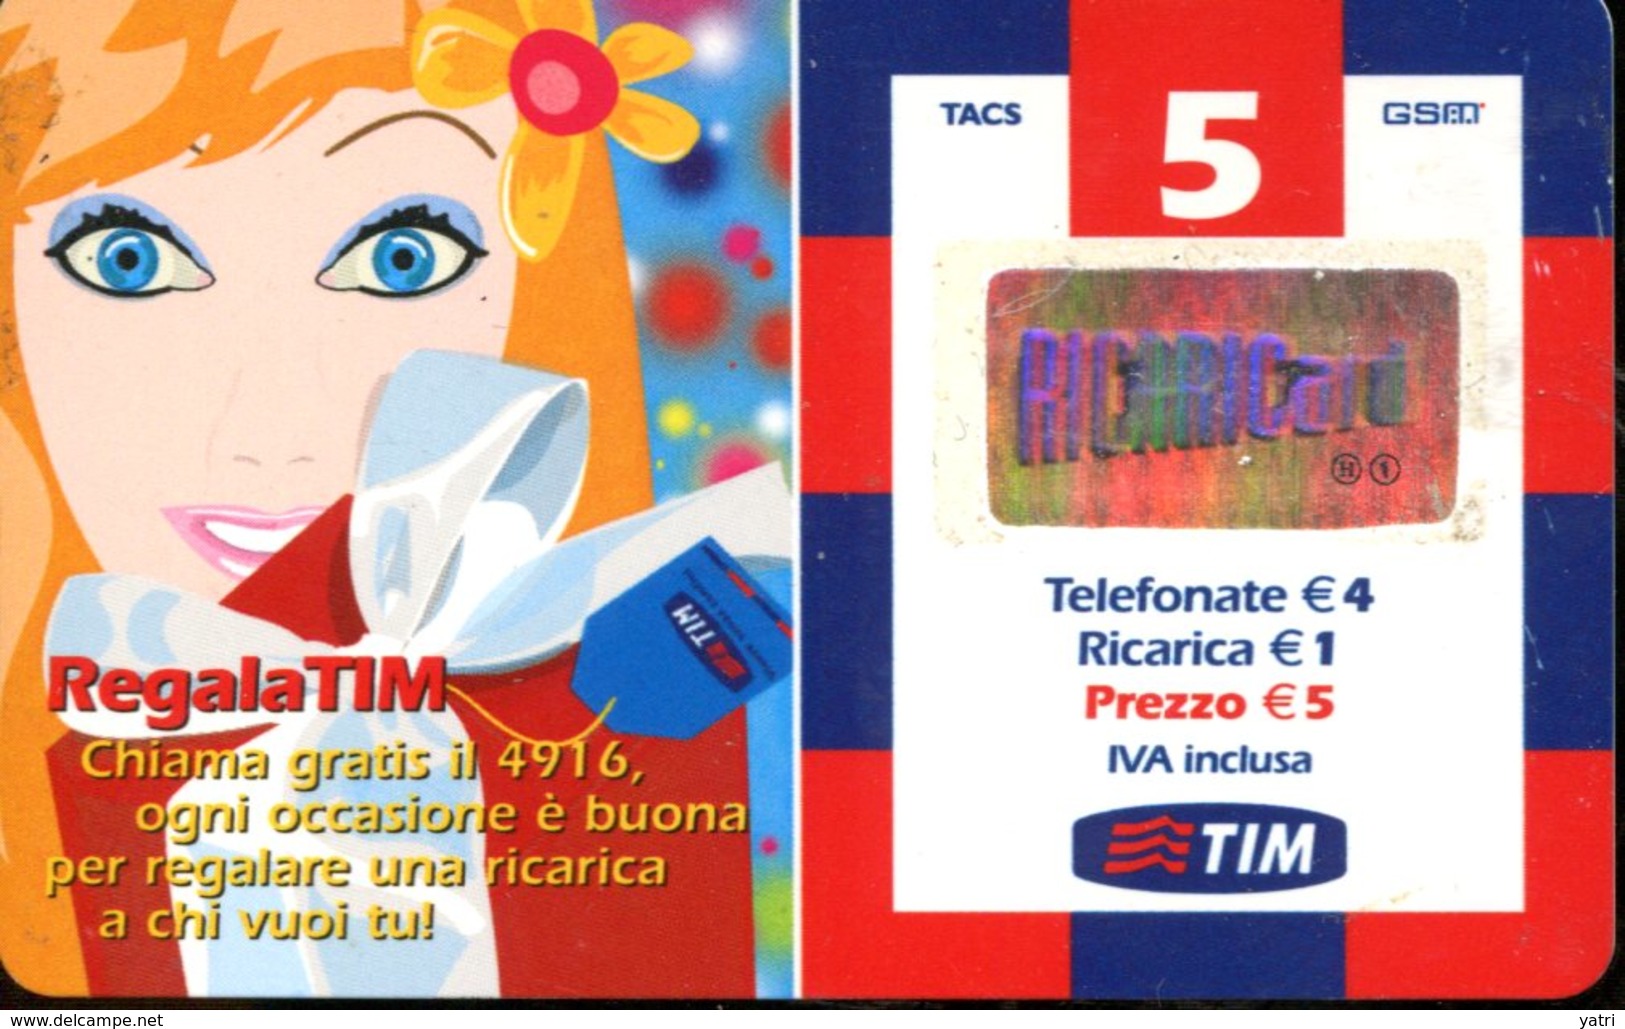 Carta Prepagata TIM - Validità 03/2007 - Schede GSM, Prepagate & Ricariche